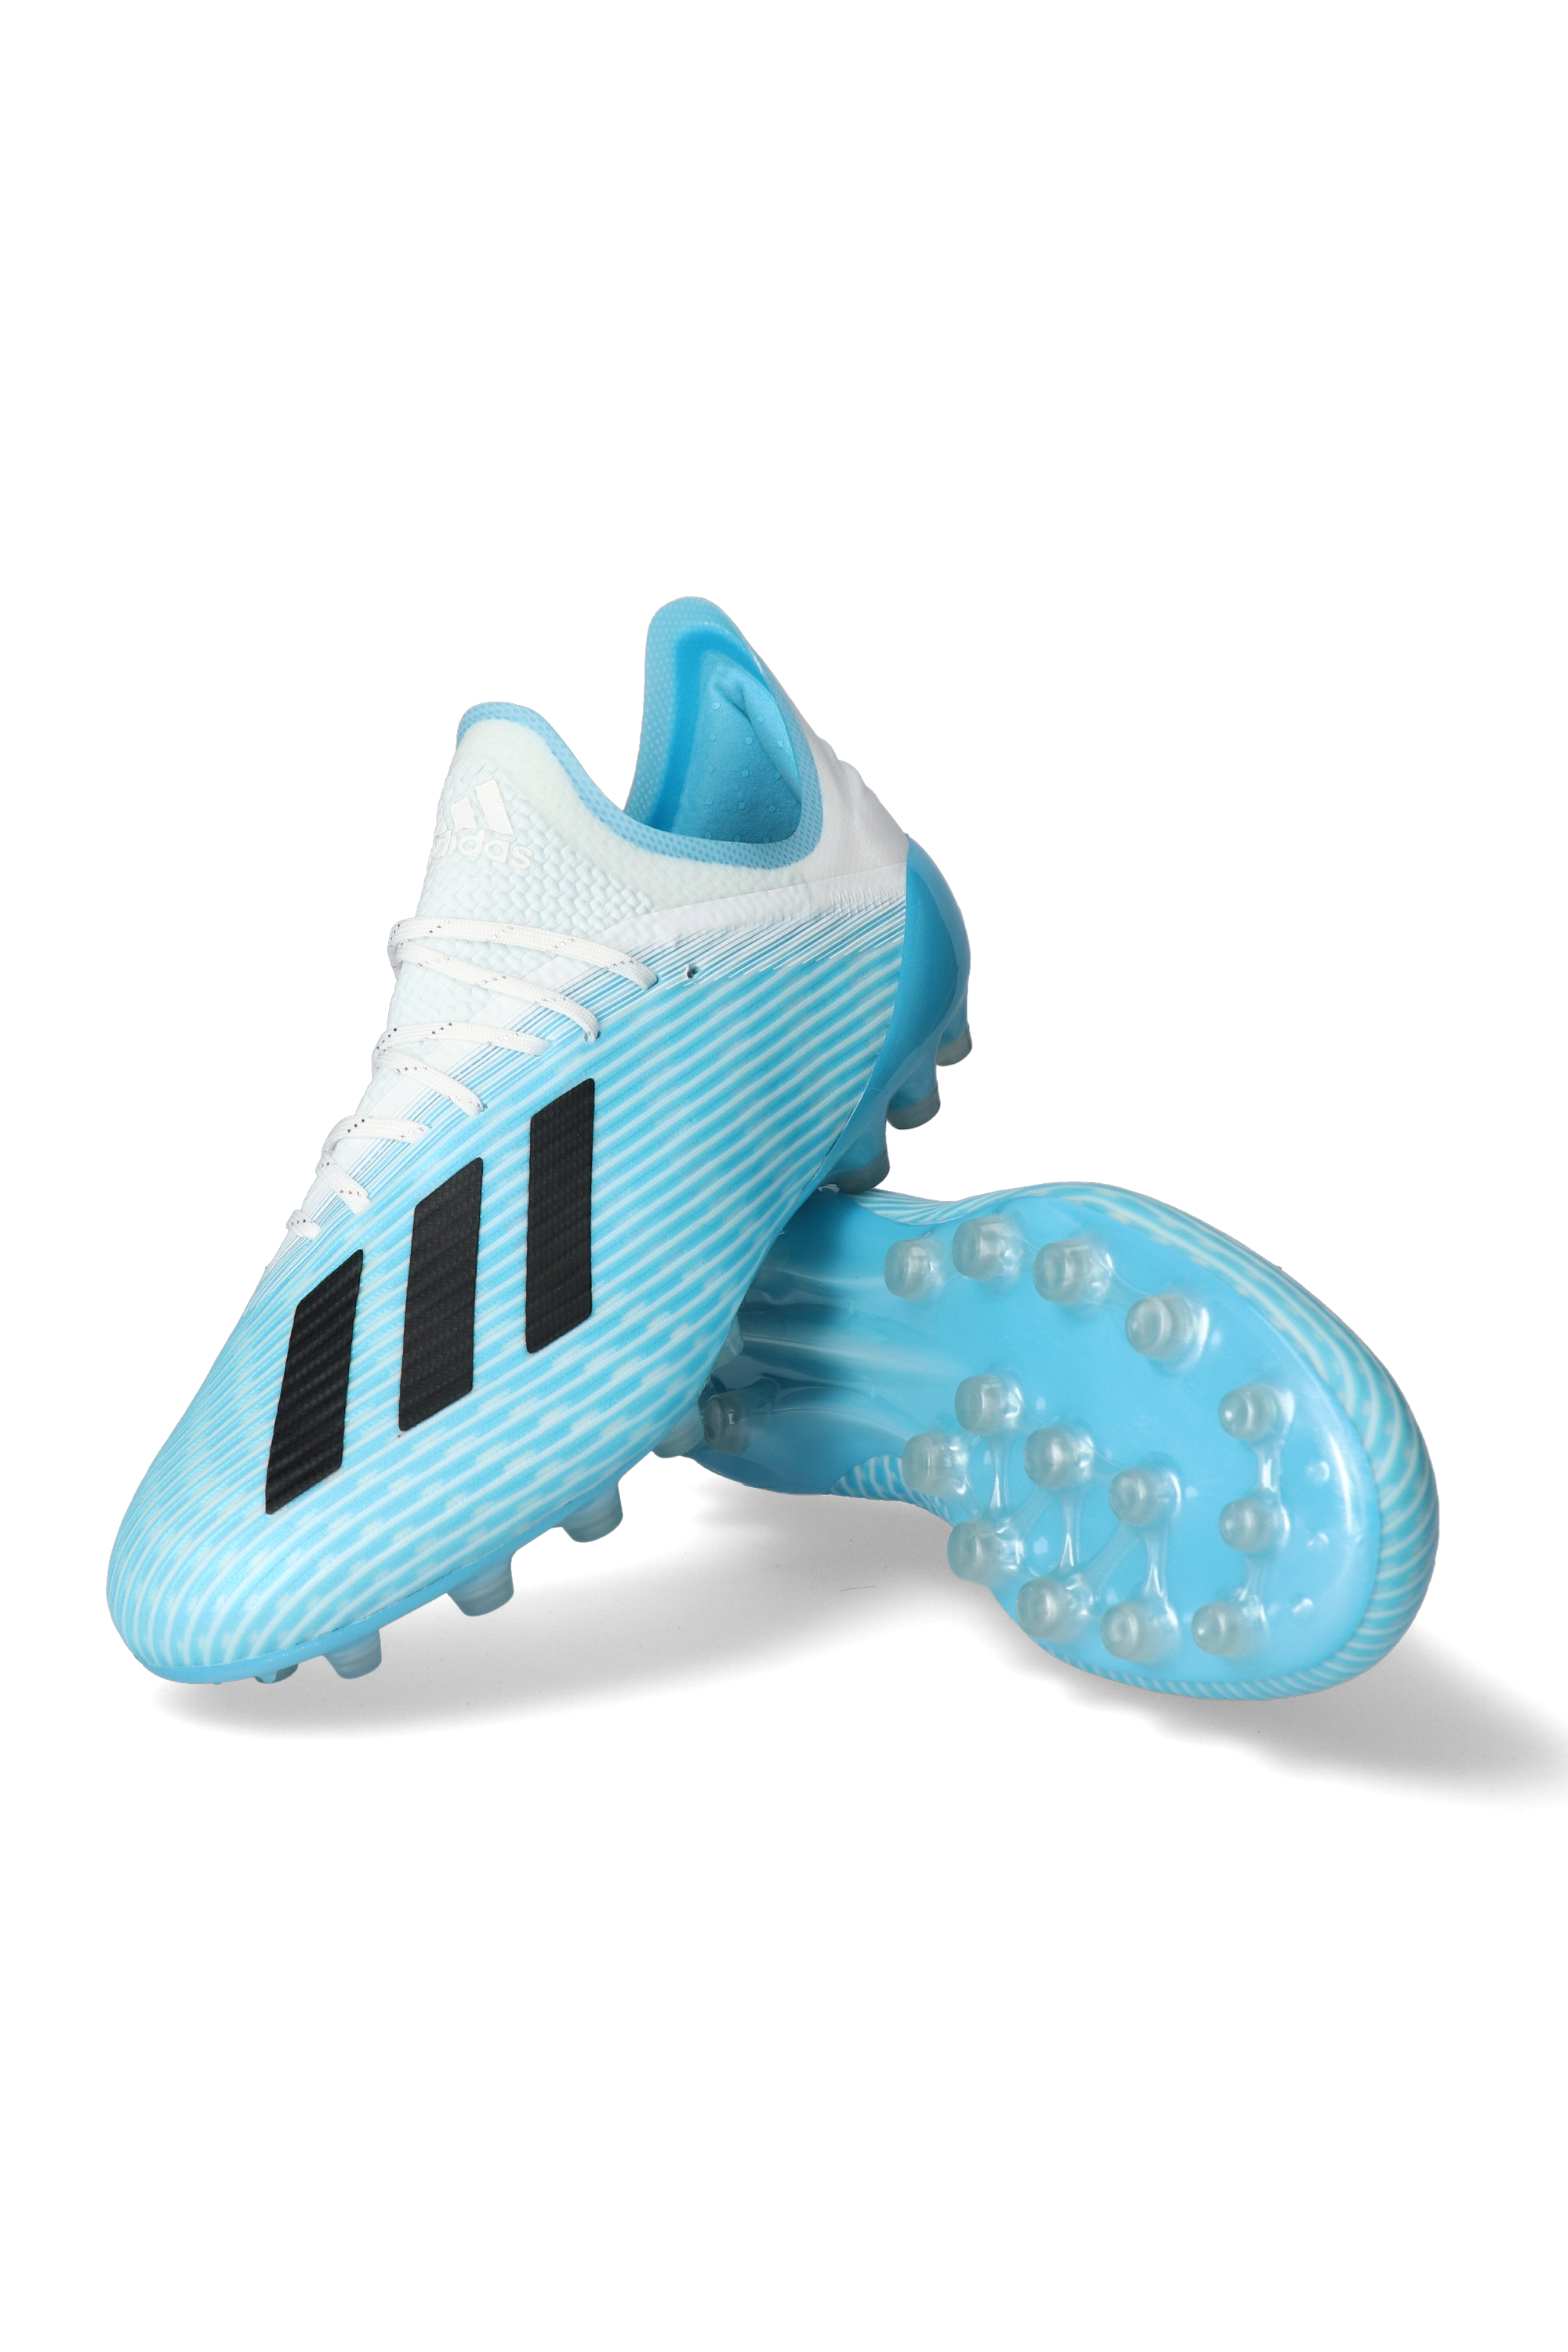 adidas X 19.1 AG | R-GOL.com - Football boots & equipment